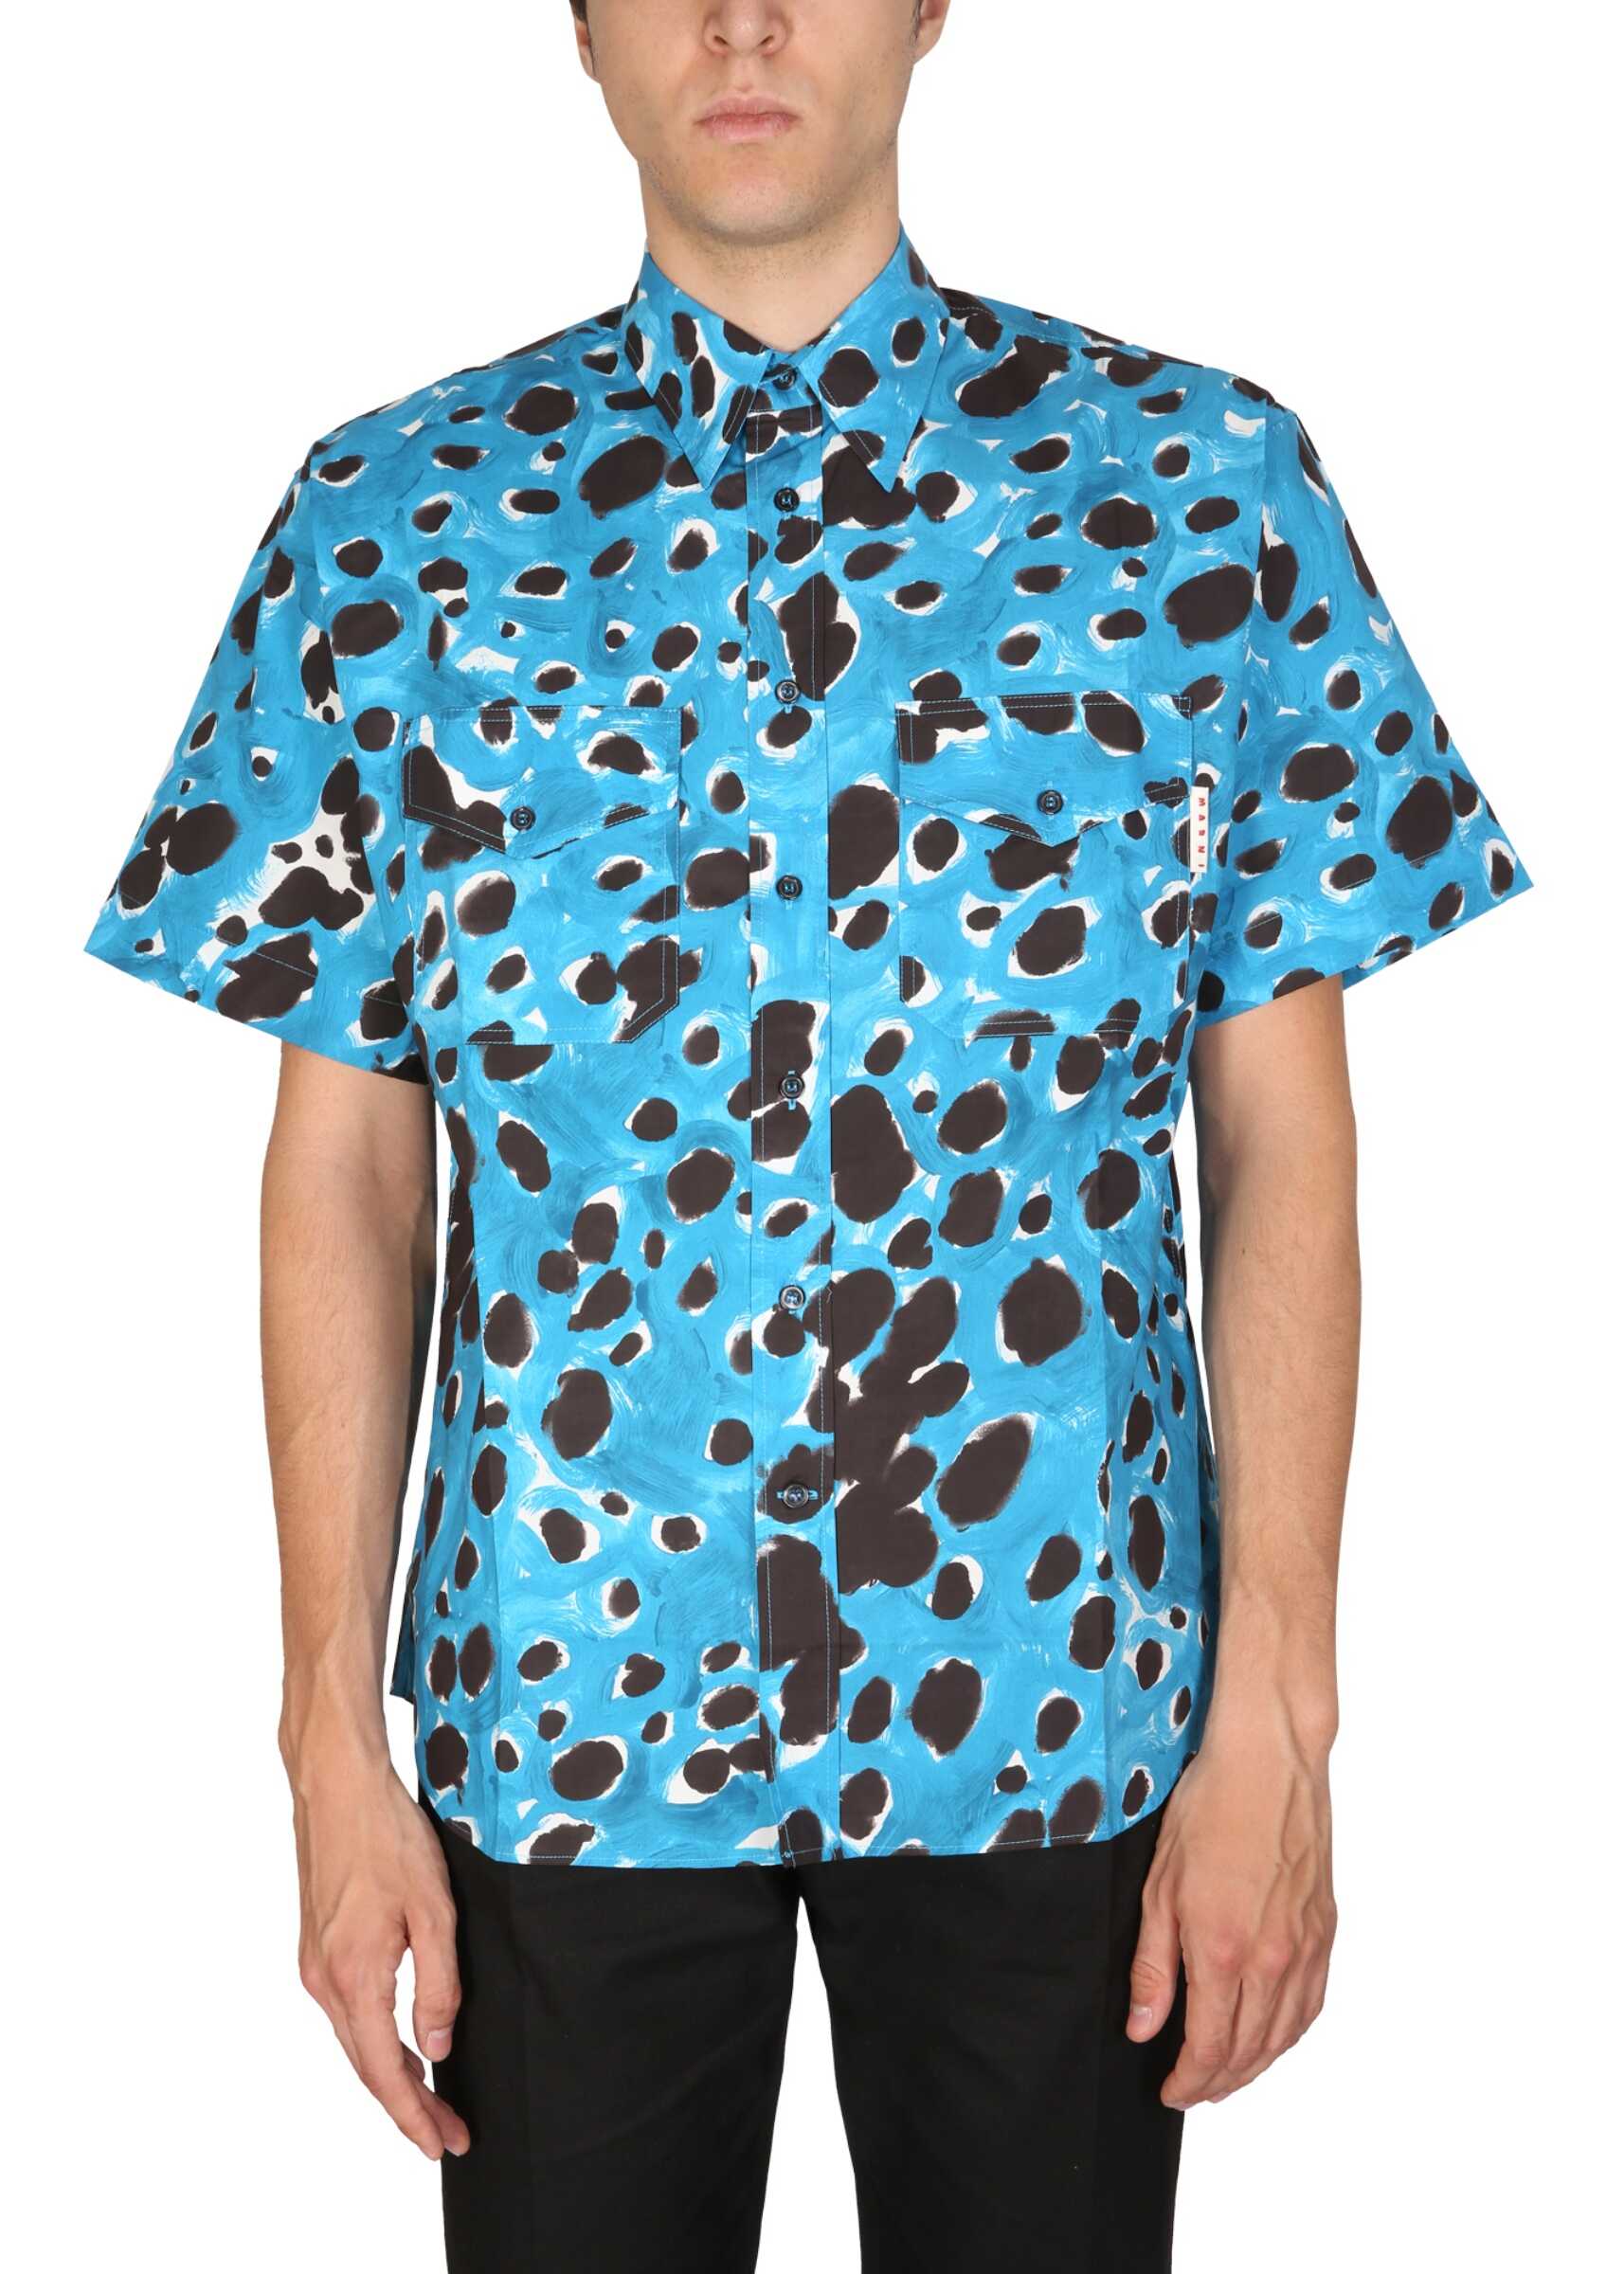 Marni "Pop Dots" Print Shirt BABY BLUE